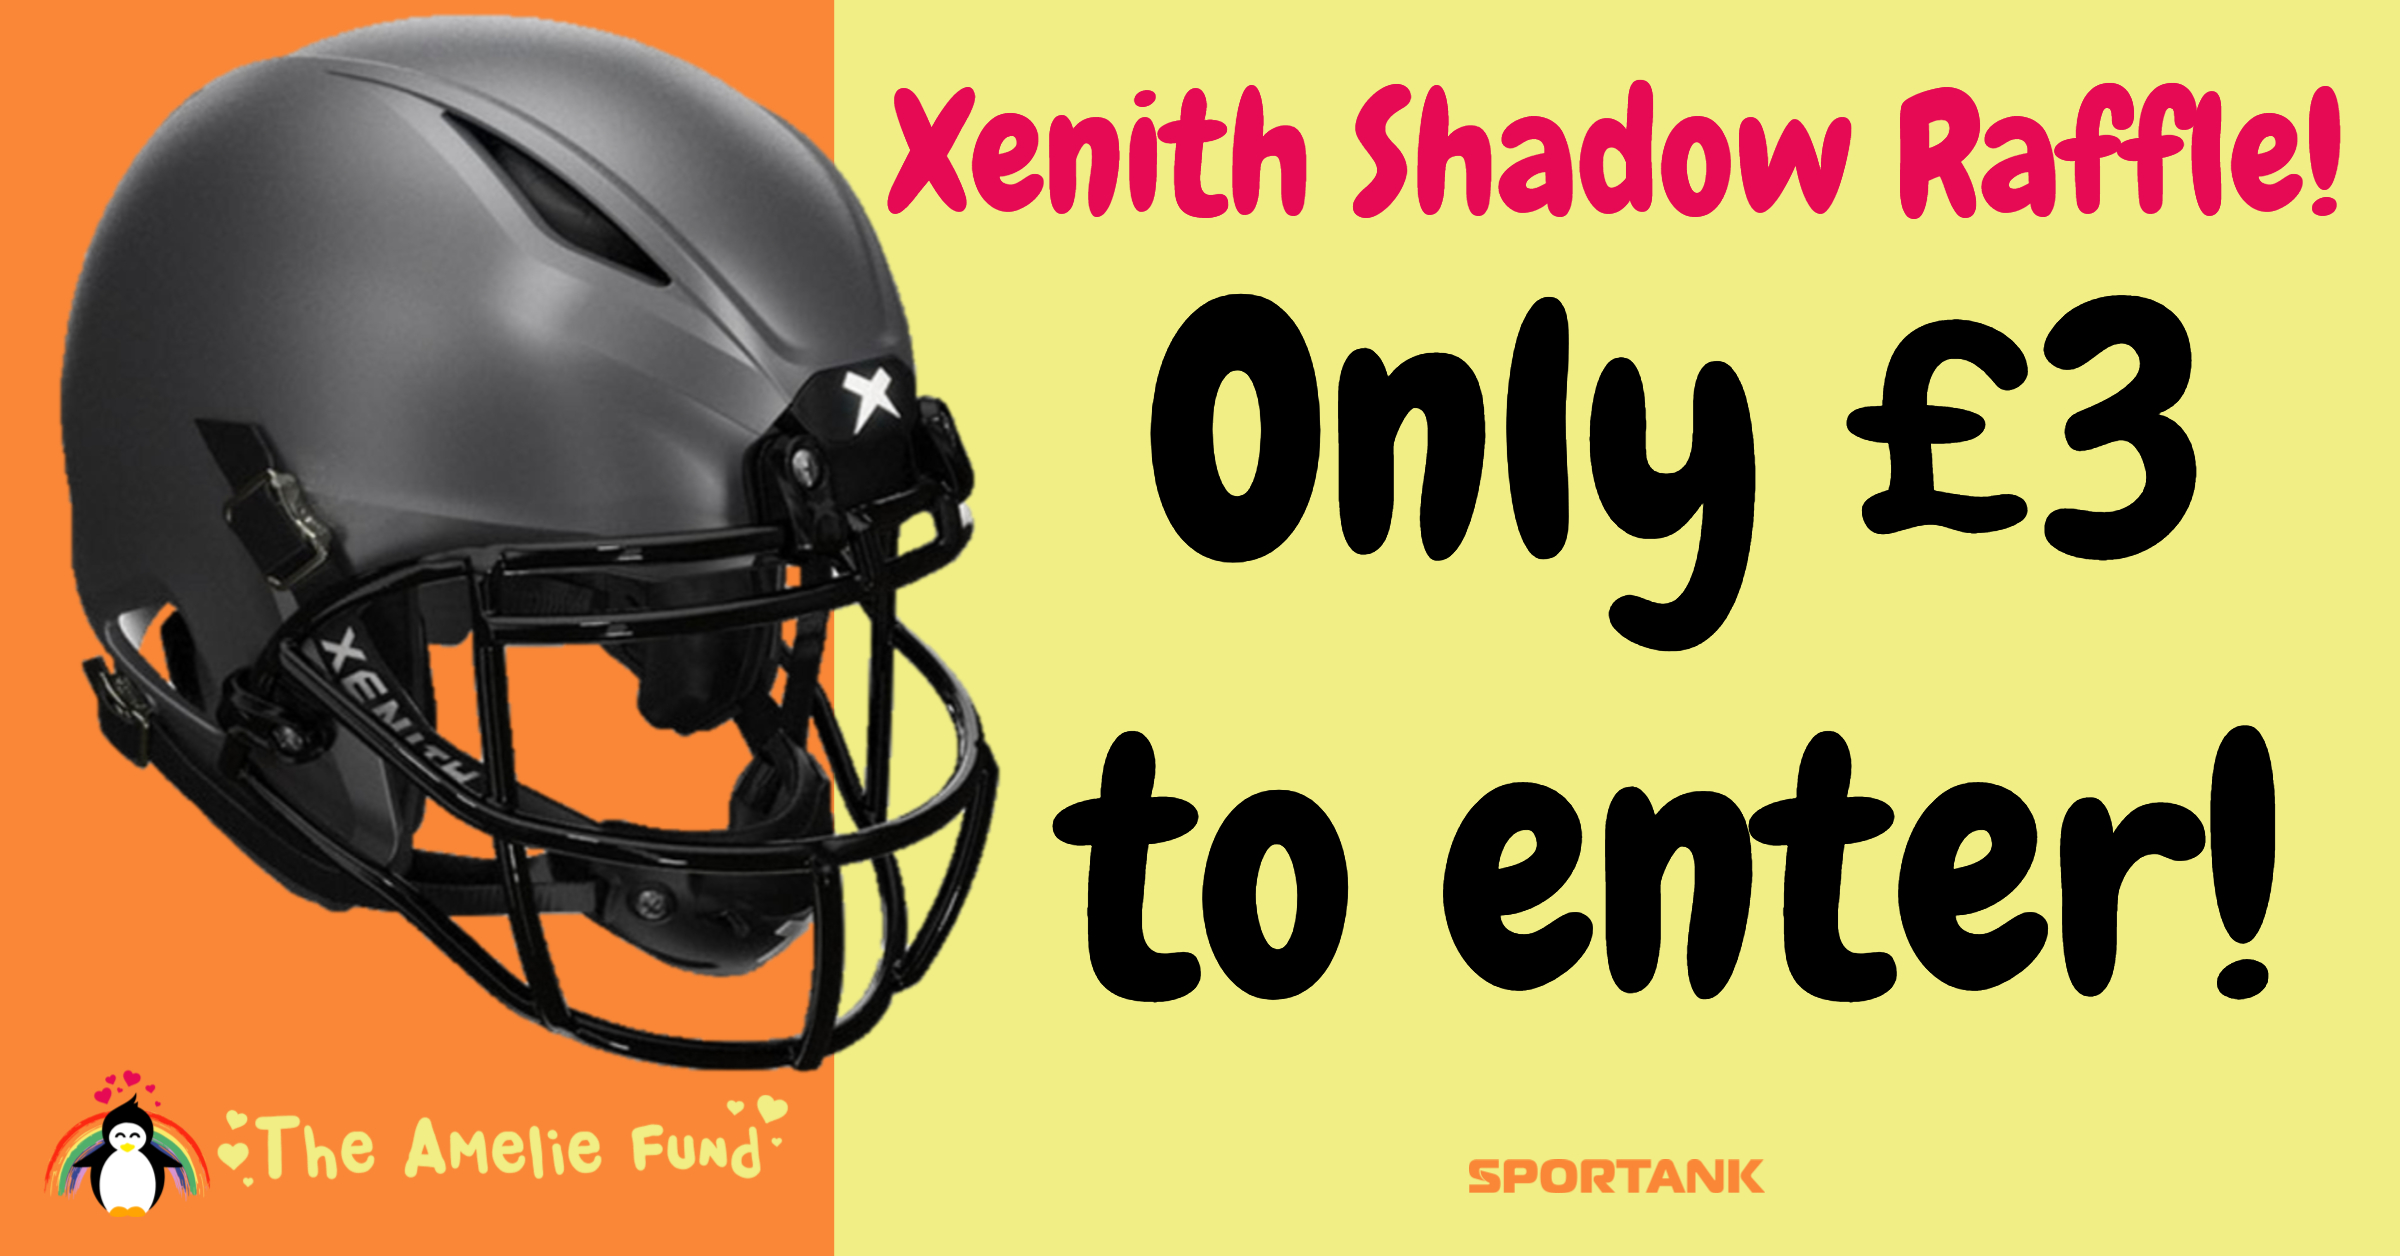 Xenith Shadow Helmet Fundraiser Raffle